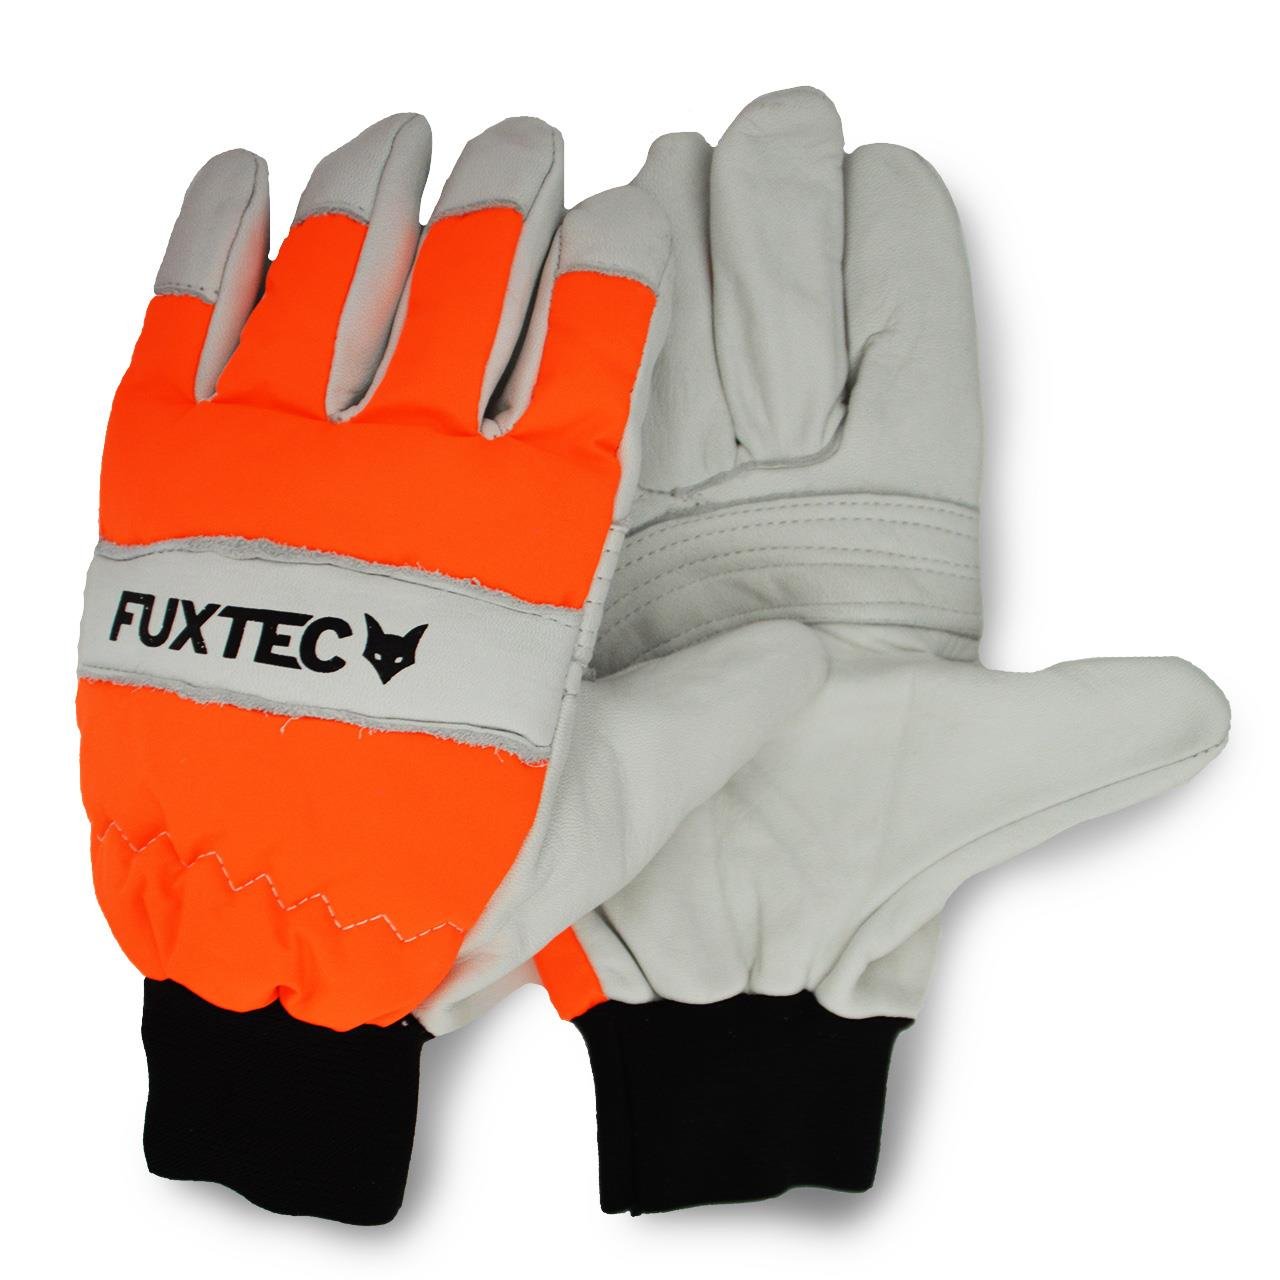 FUXTEC cut protection gloves (lefty)